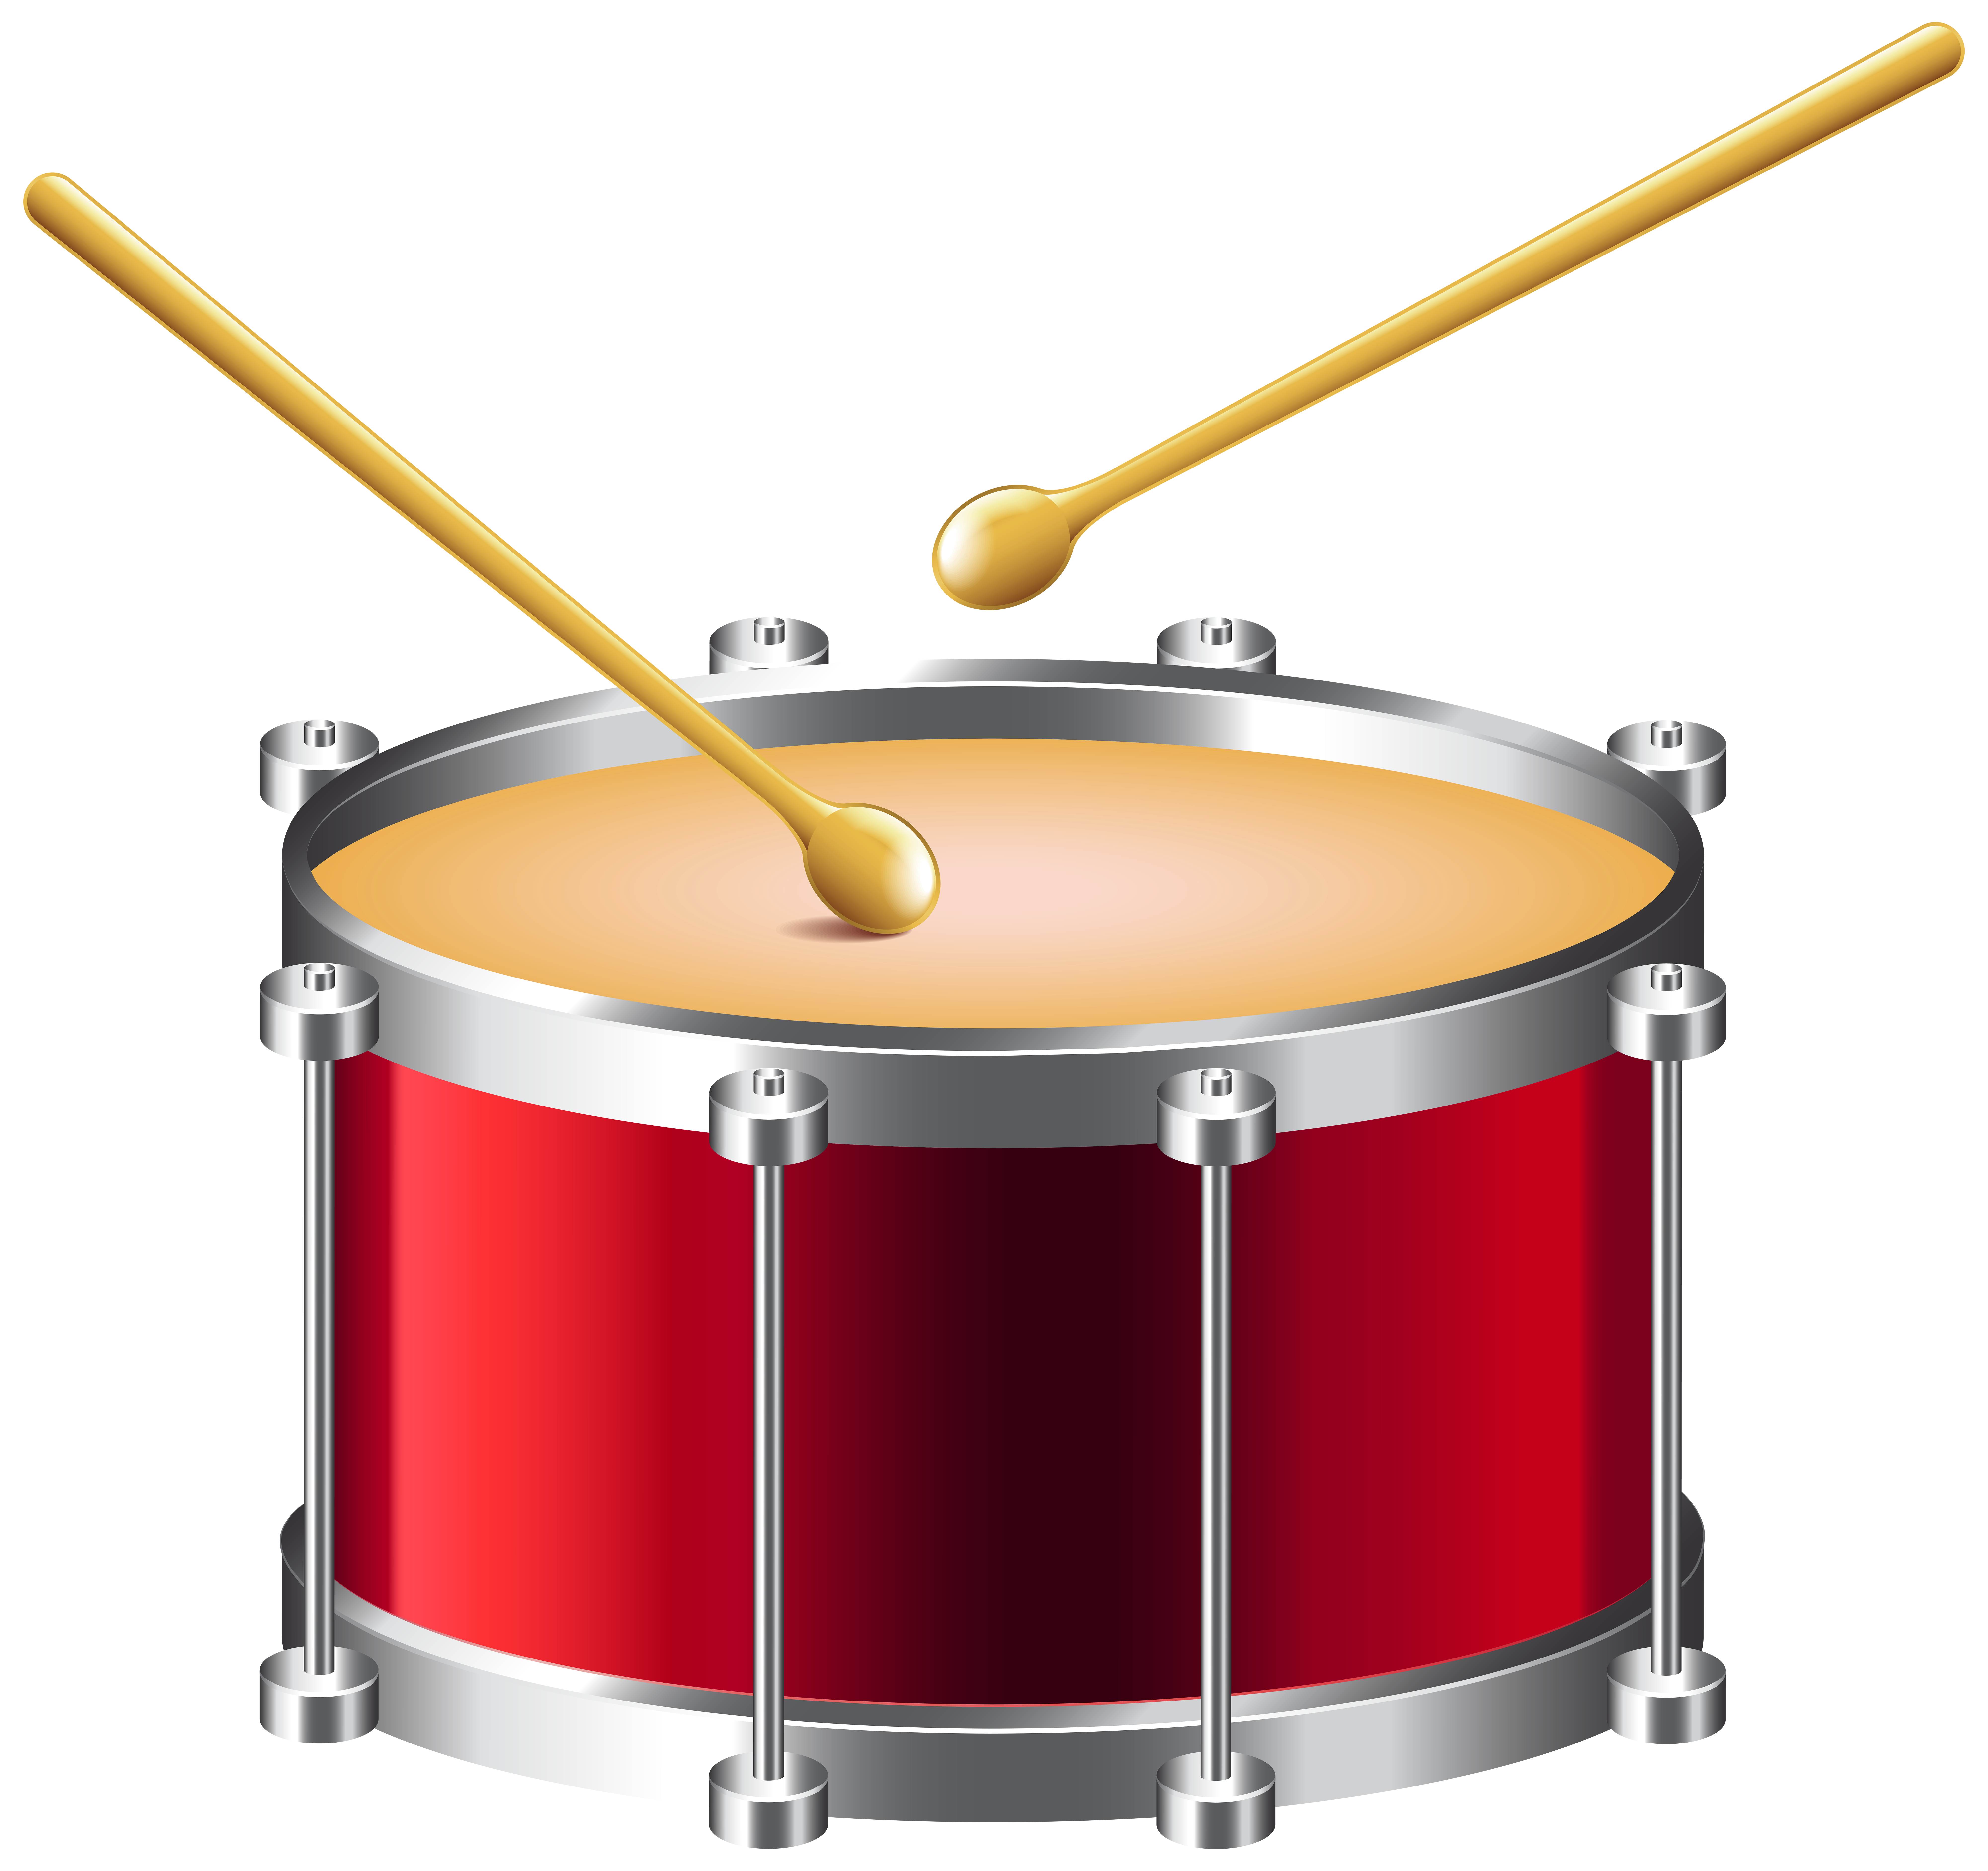 Tom Skin Real Drum Png : Gridlock | Rainbow Six Wiki | Fandom - Drum ...